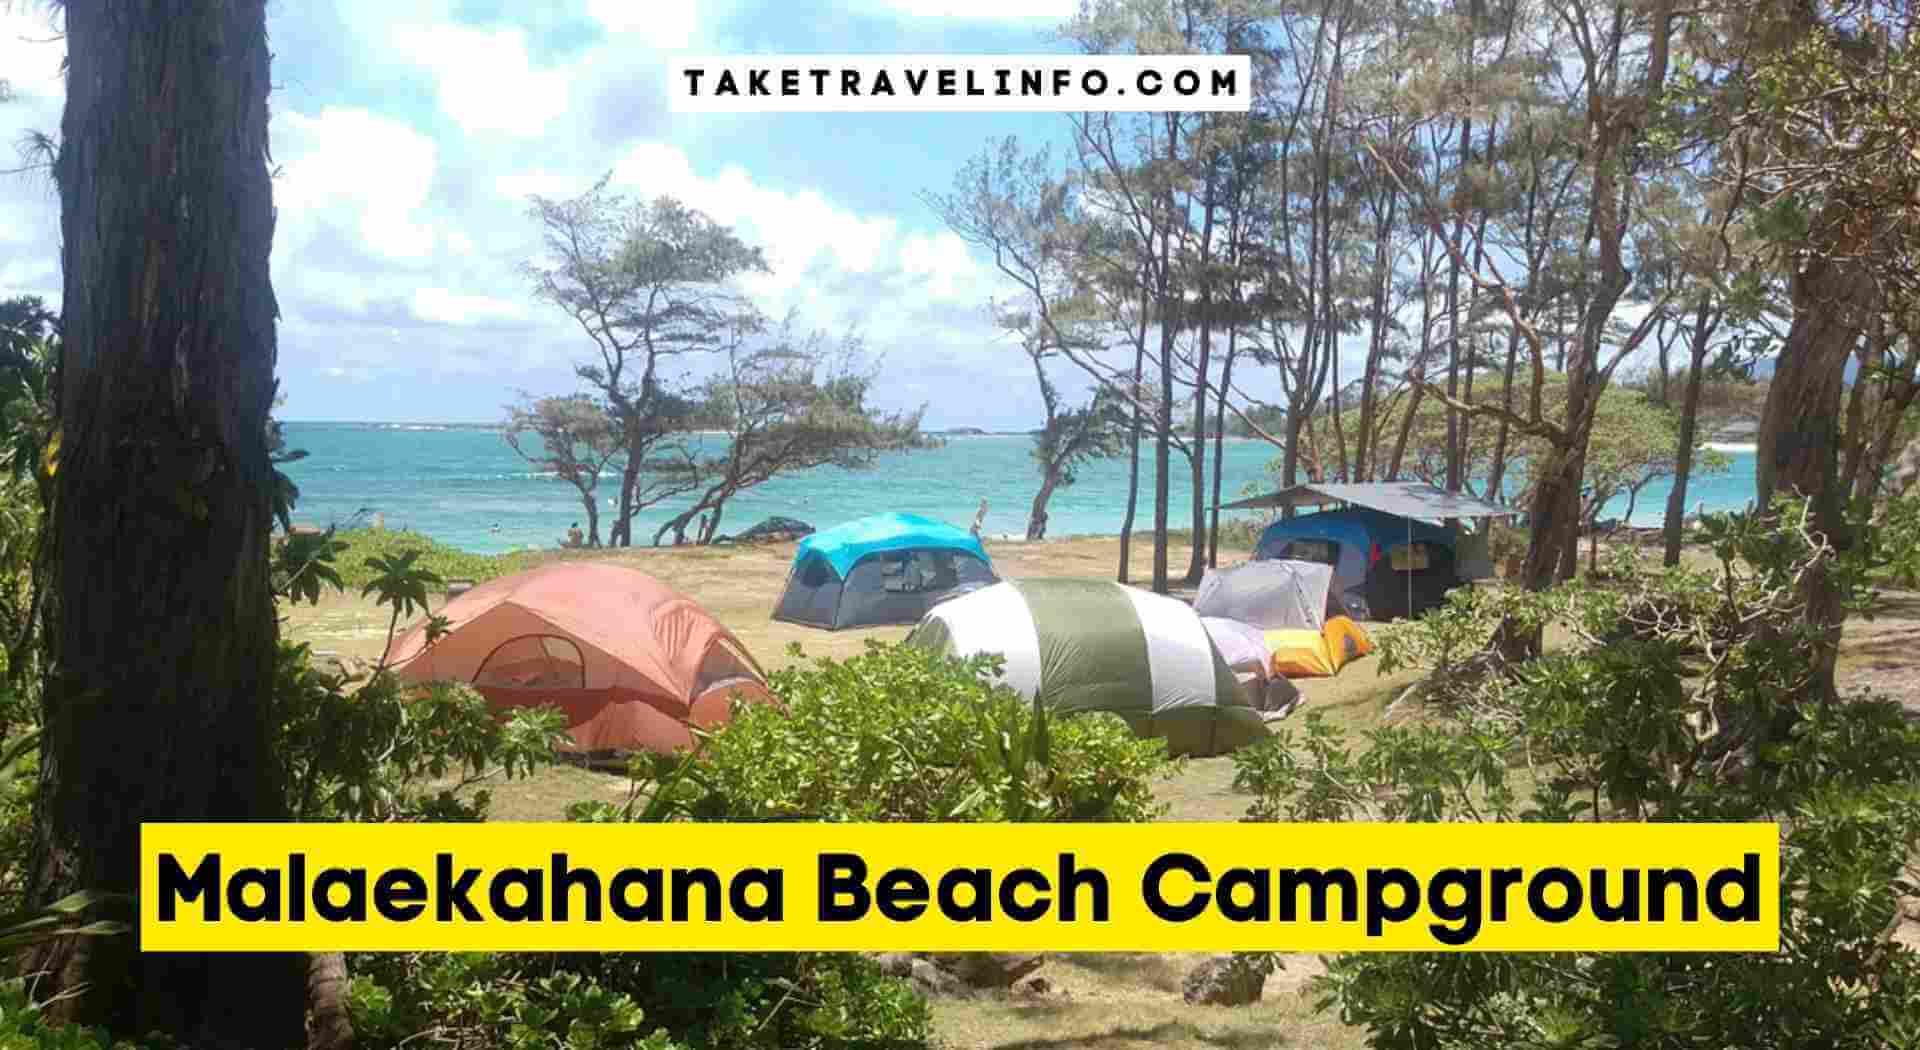 Malaekahana Beach Campground: Your Ultimate Camping Paradise